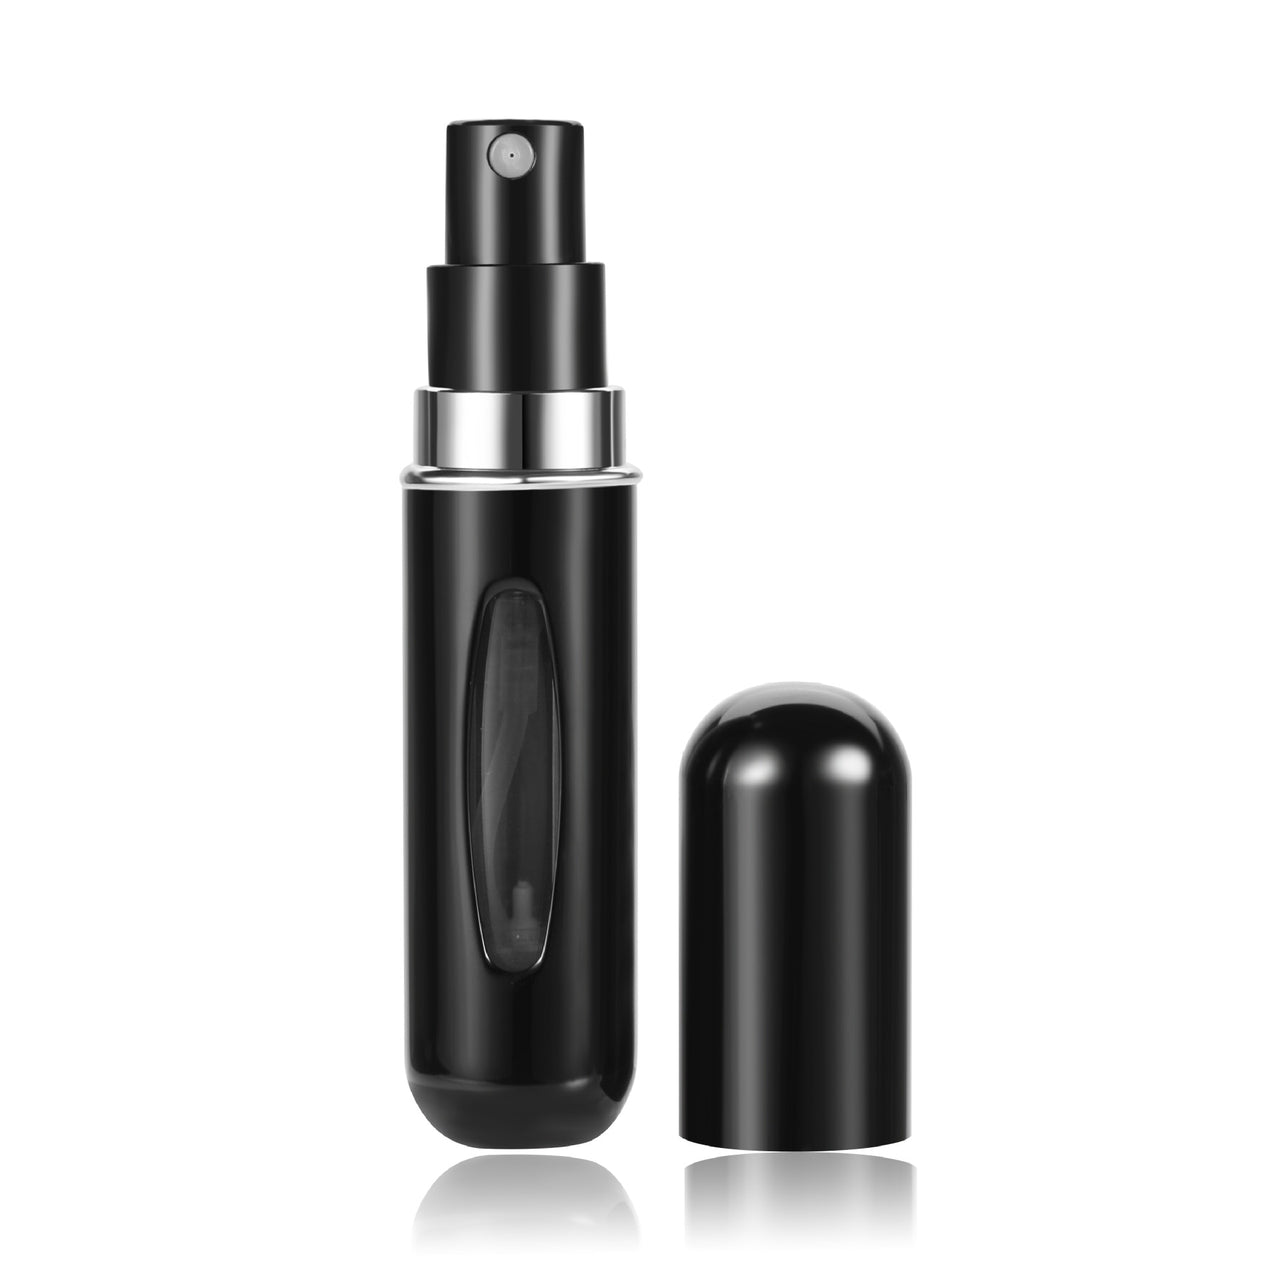 Portable Mini Refillable Perfume Empty Spray